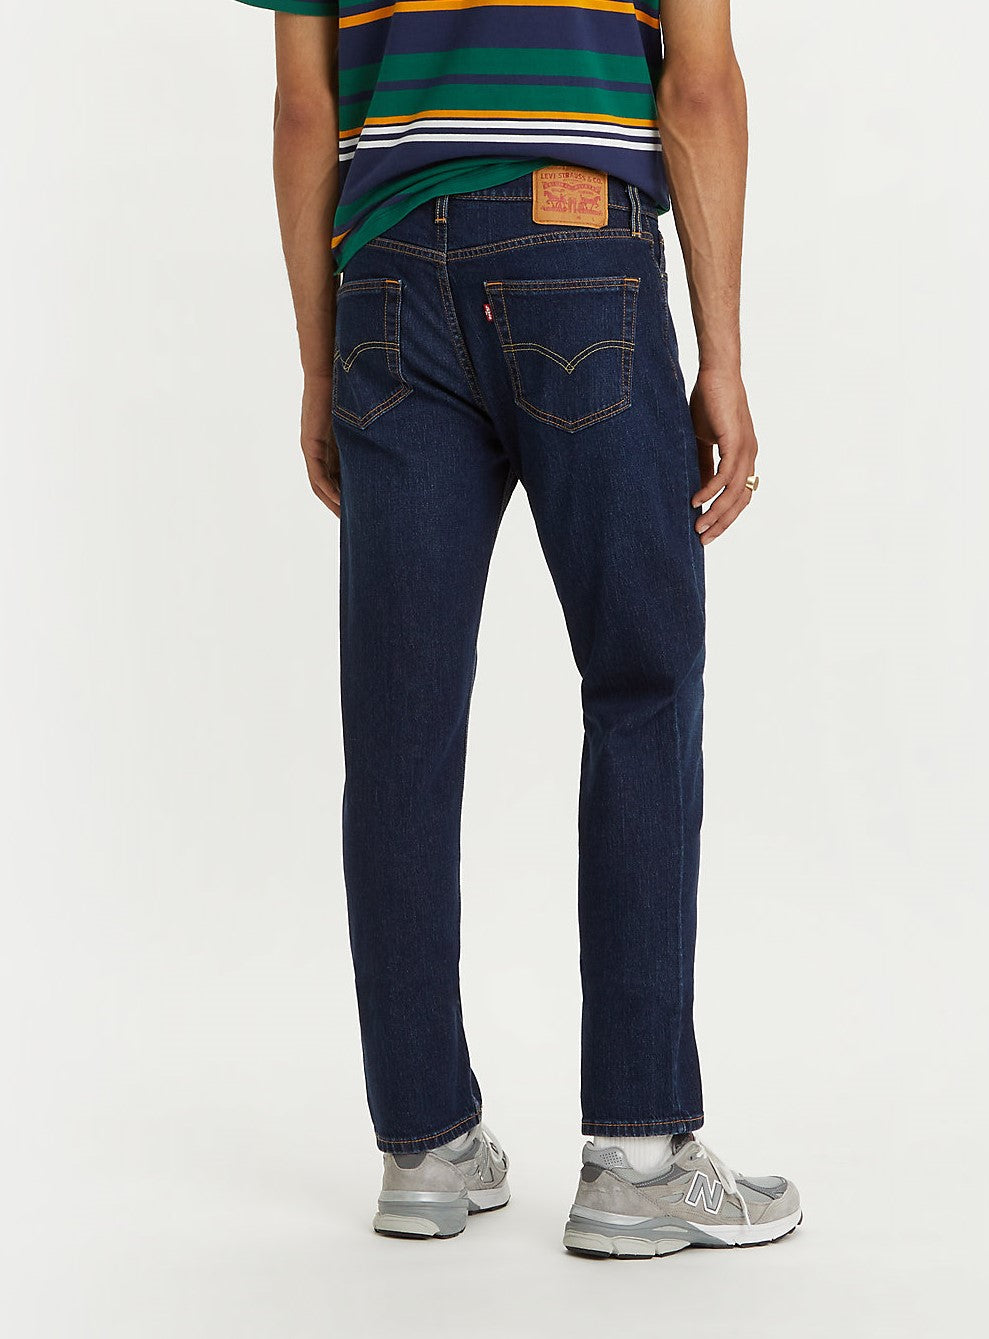 pantalones-jeans-levis-511-slim-p-caballeros-5